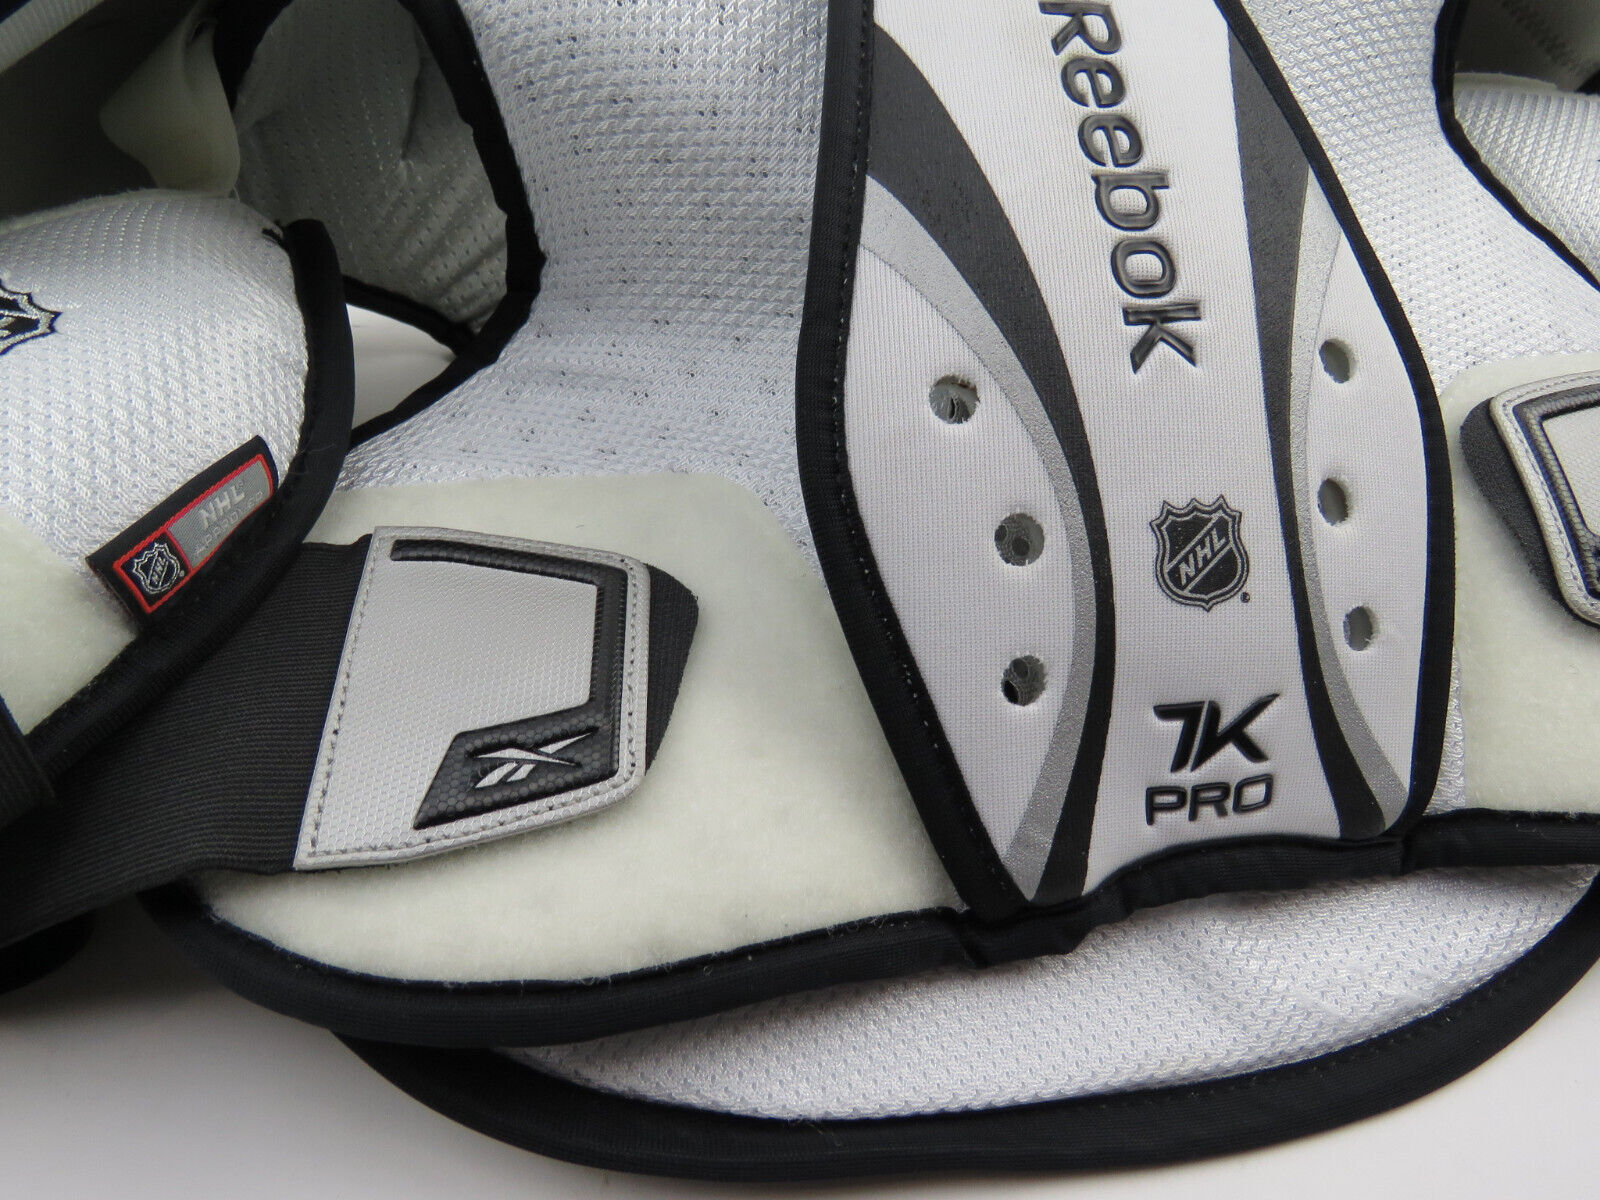 Reebok JOFA 7K NHL Pro Stock Ice Hockey Player Shoulder Pads Senior Size M / L